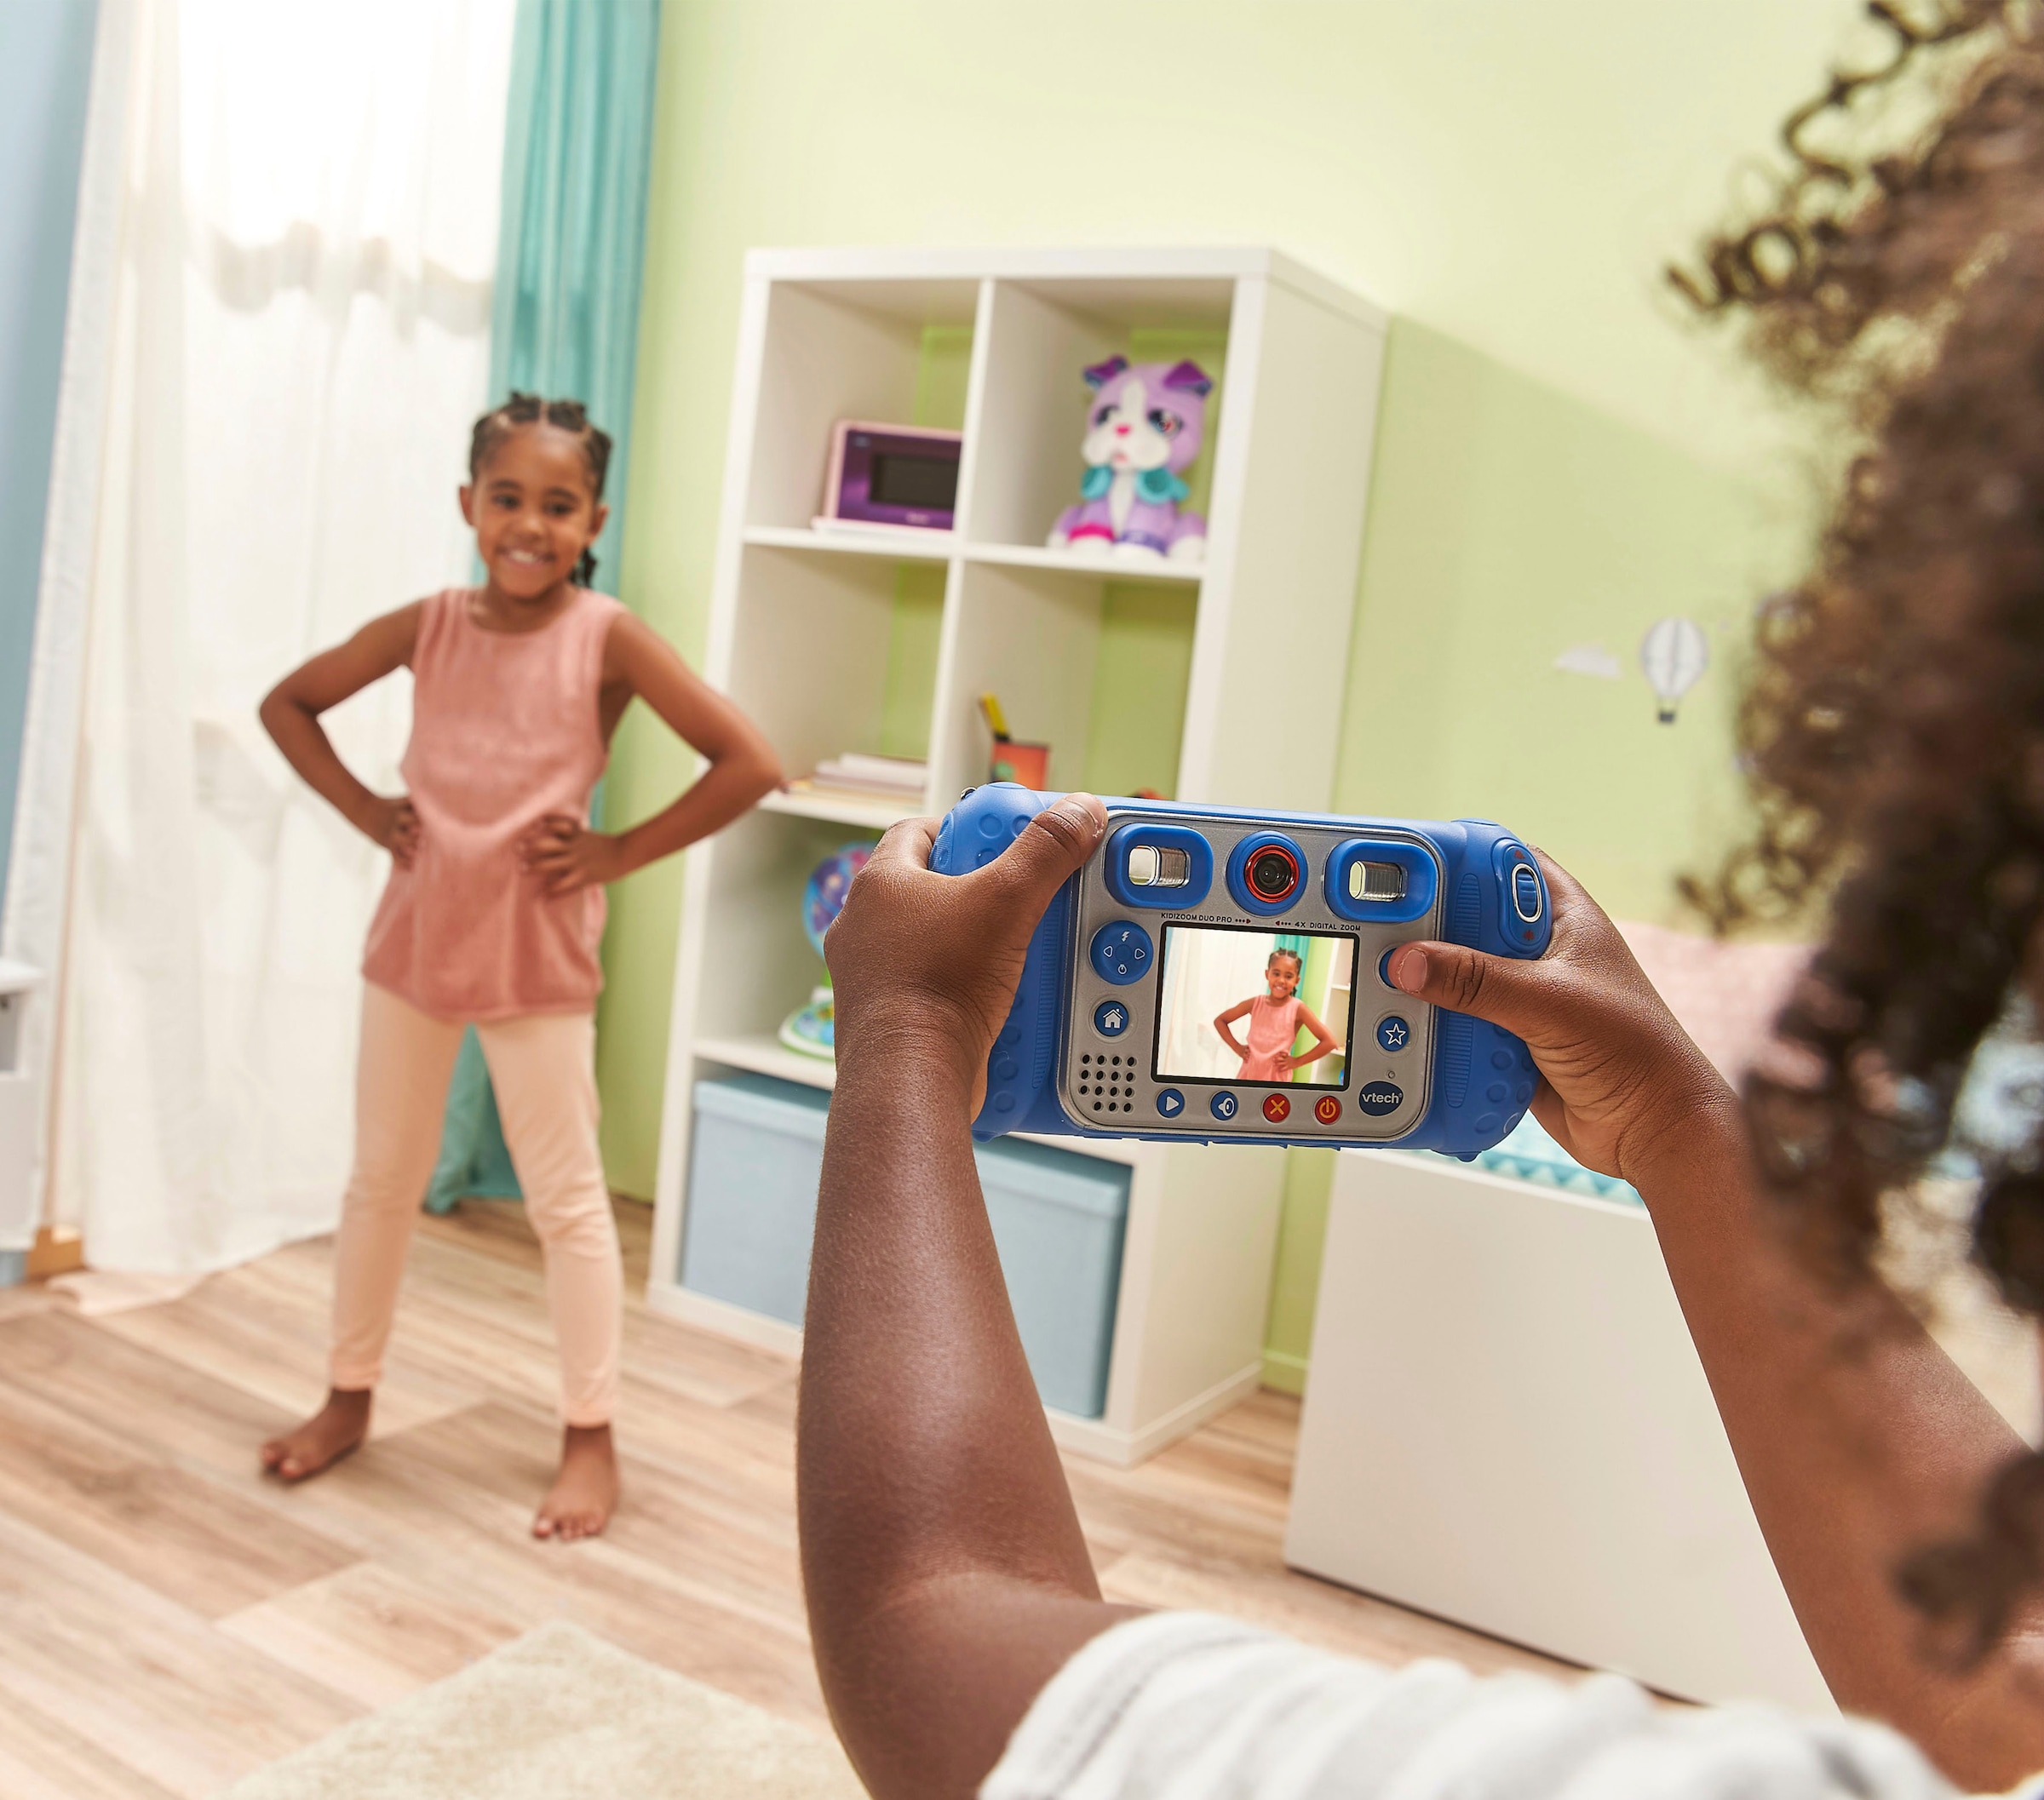 Vtech® Kinderkamera »KidiZoom Duo Pro, blau«, inklusive Tragetasche | BAUR